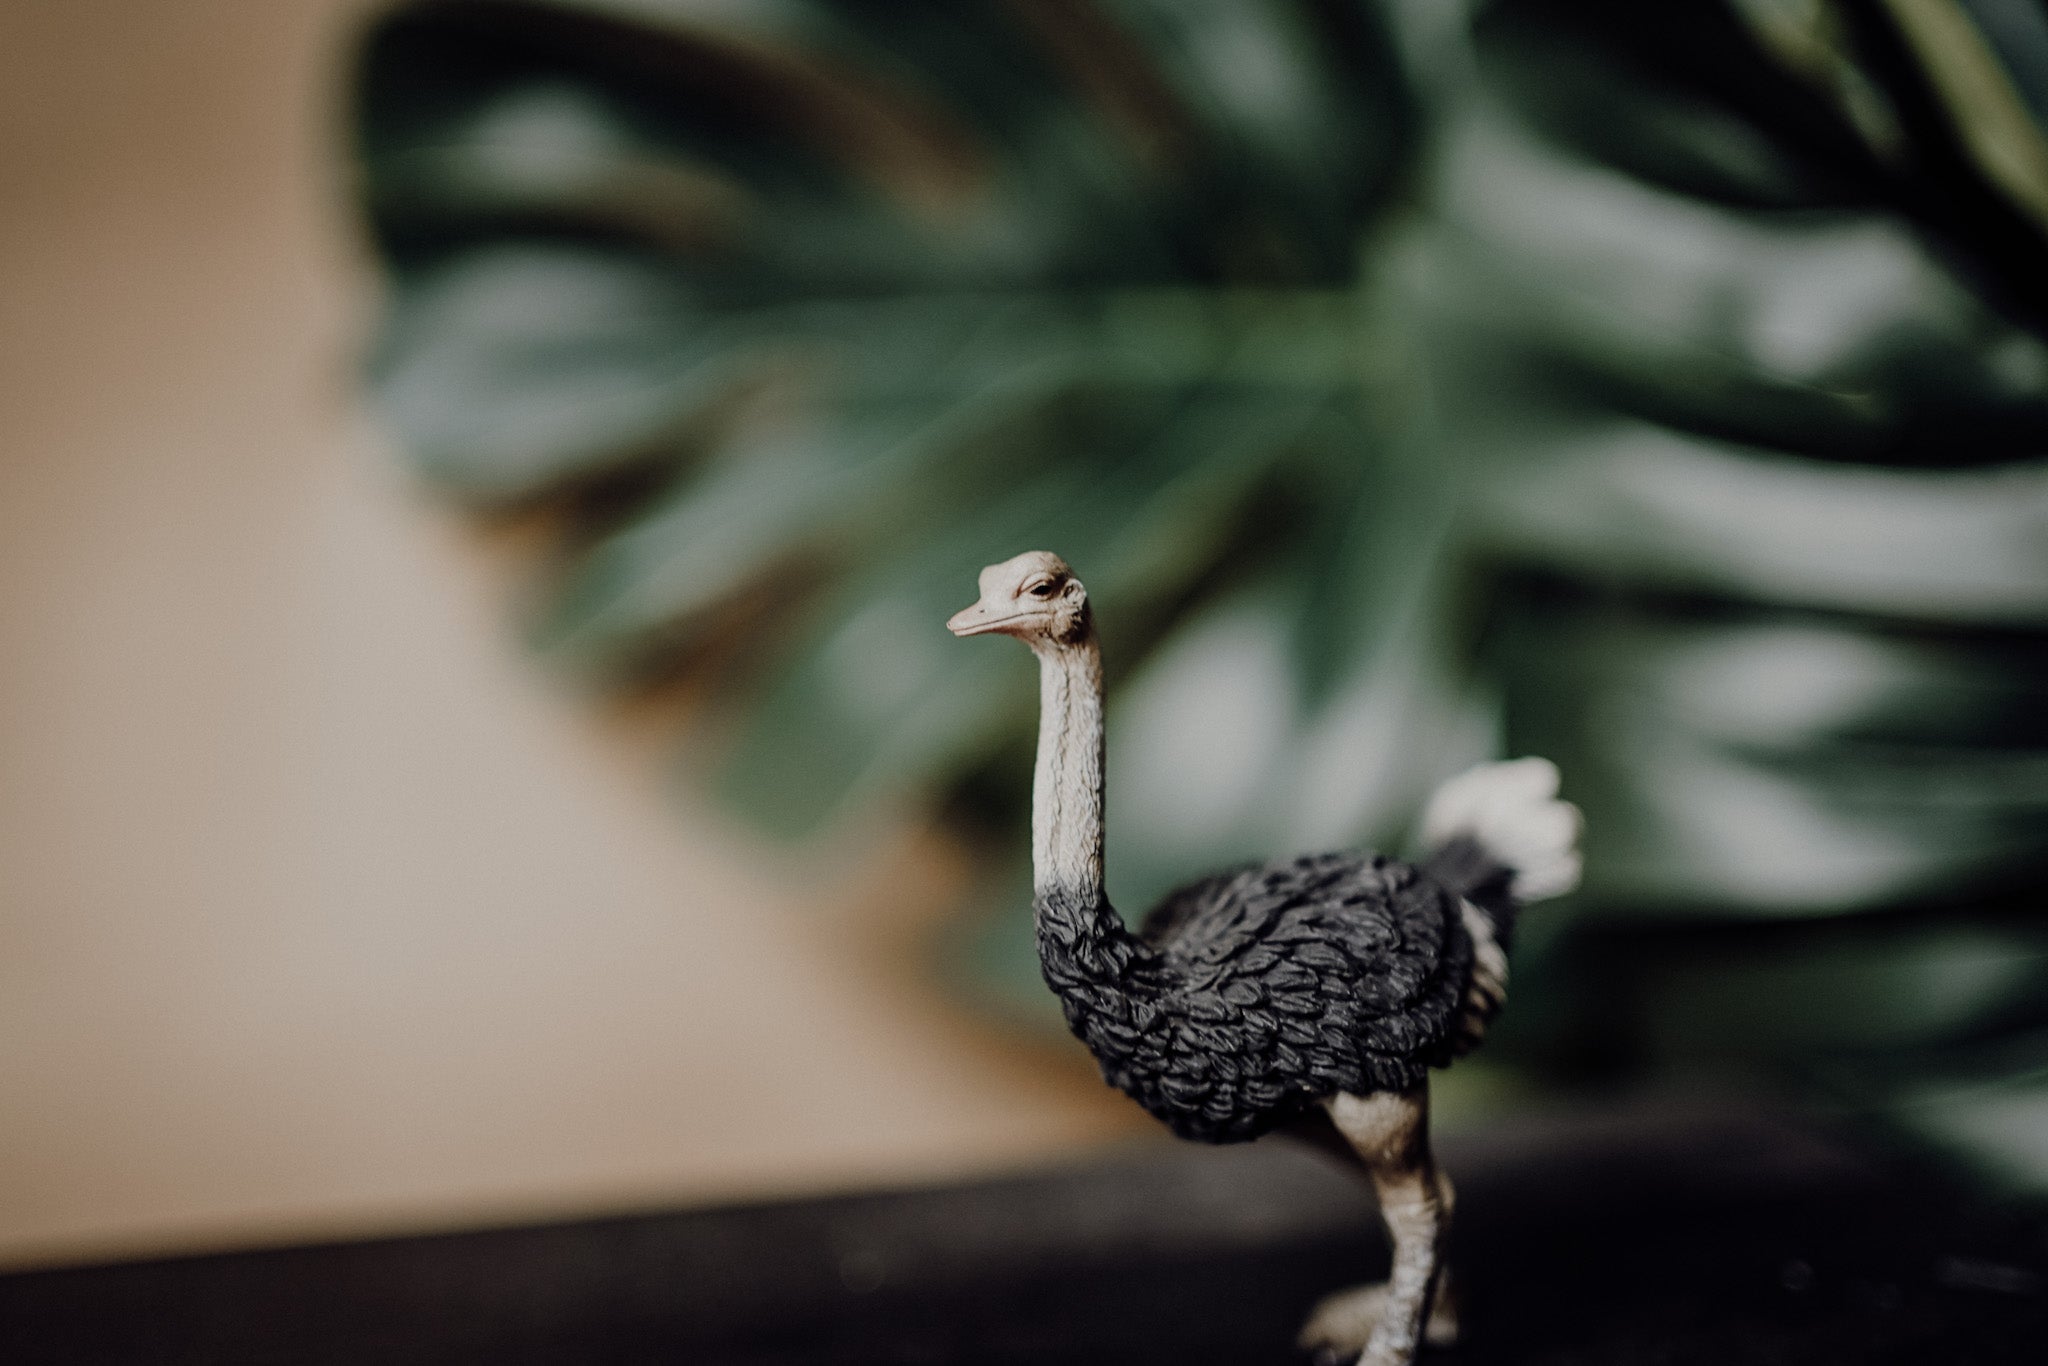 CollectA Figurine -Ostrich - The Little Je'EL.Co